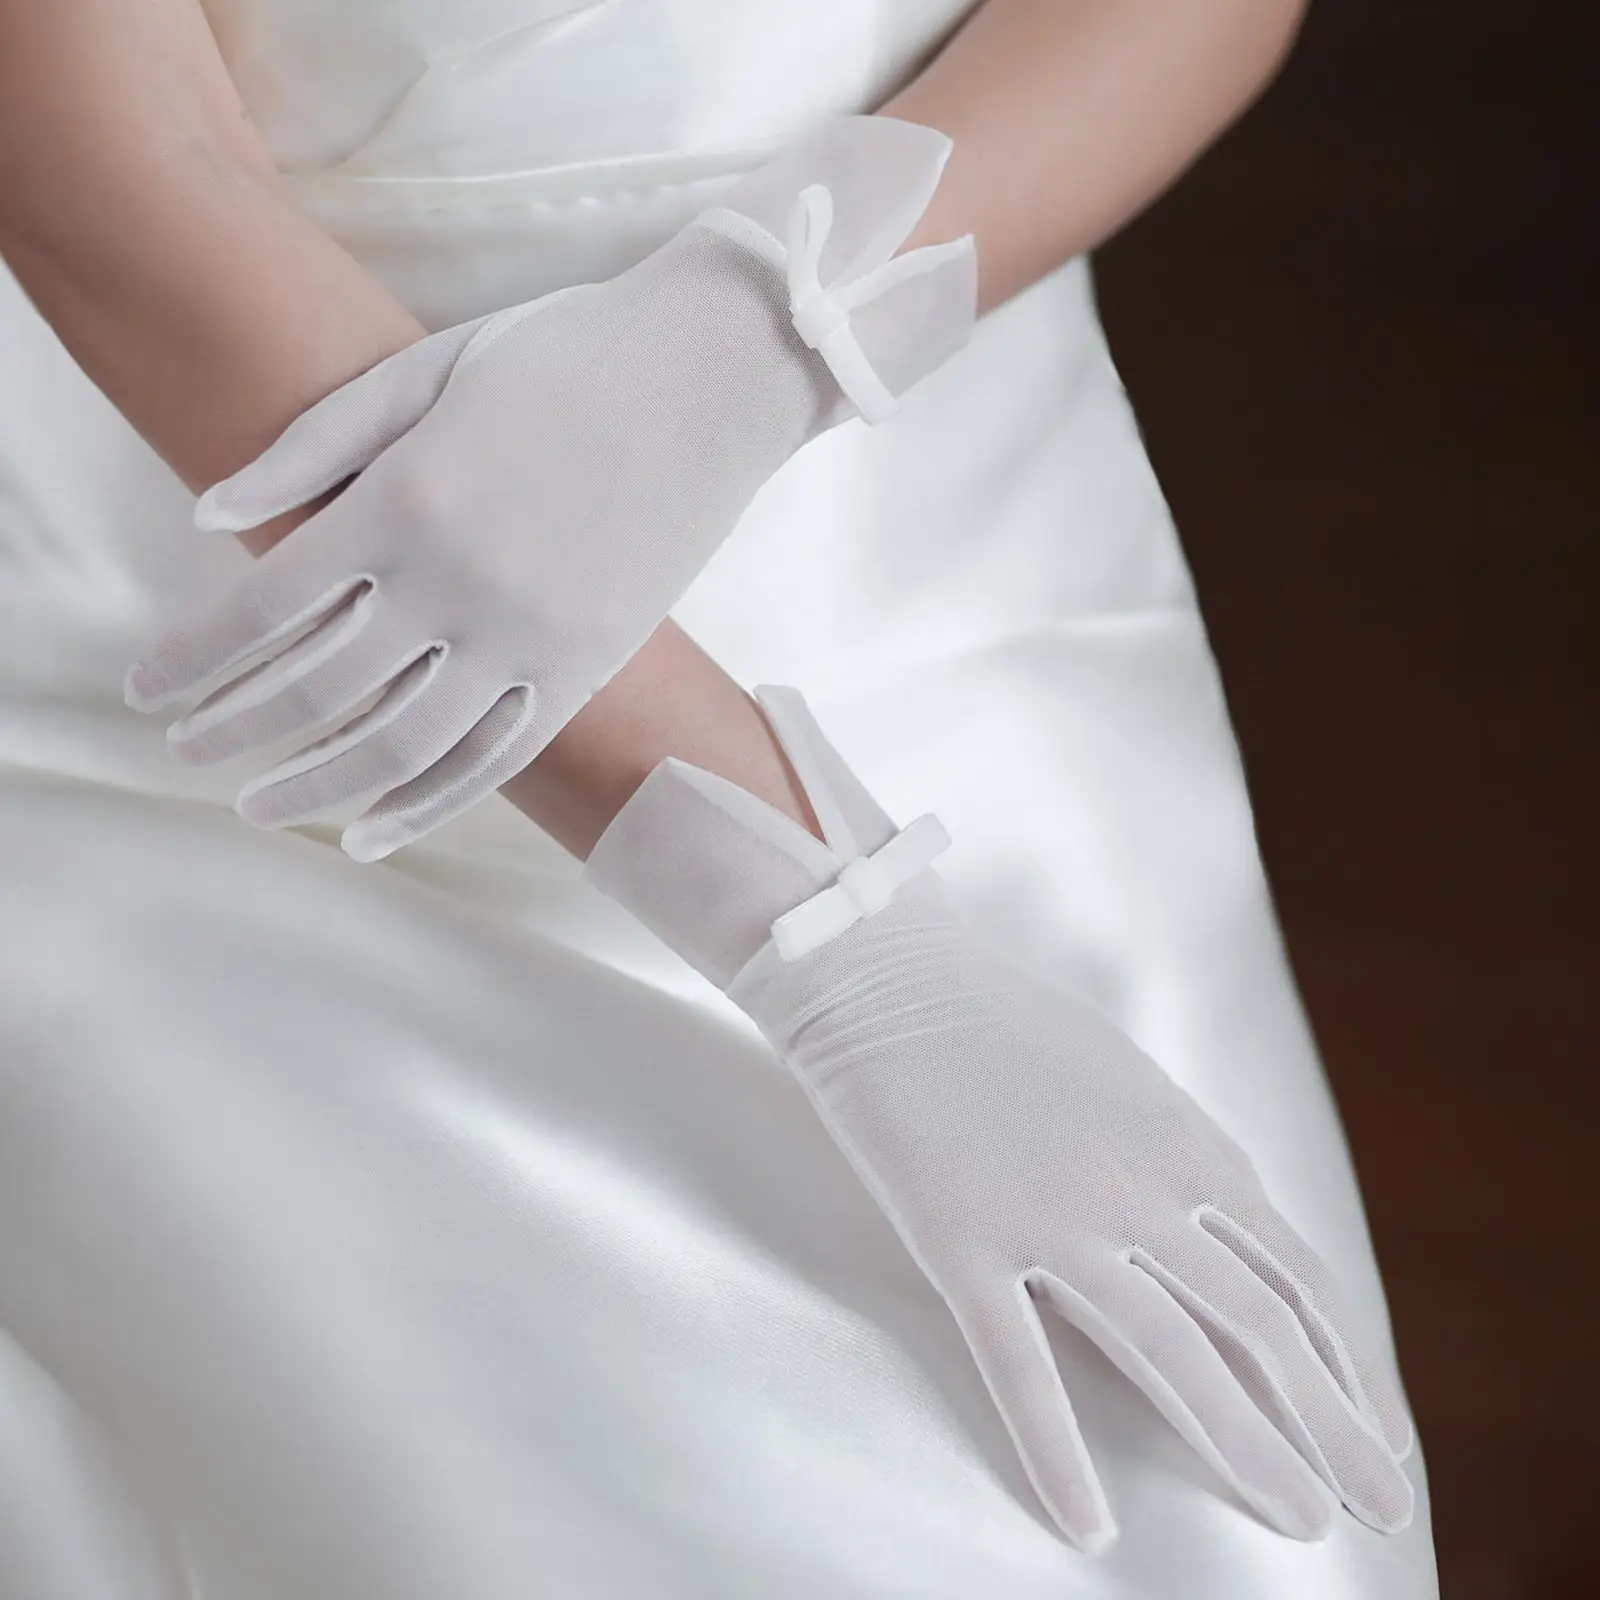 Wedding Bride Dress Gloves Women Gloves Lady Dancing Gloves Costume Accessories Dress up Elegant for Tea Party Banquet Halloween